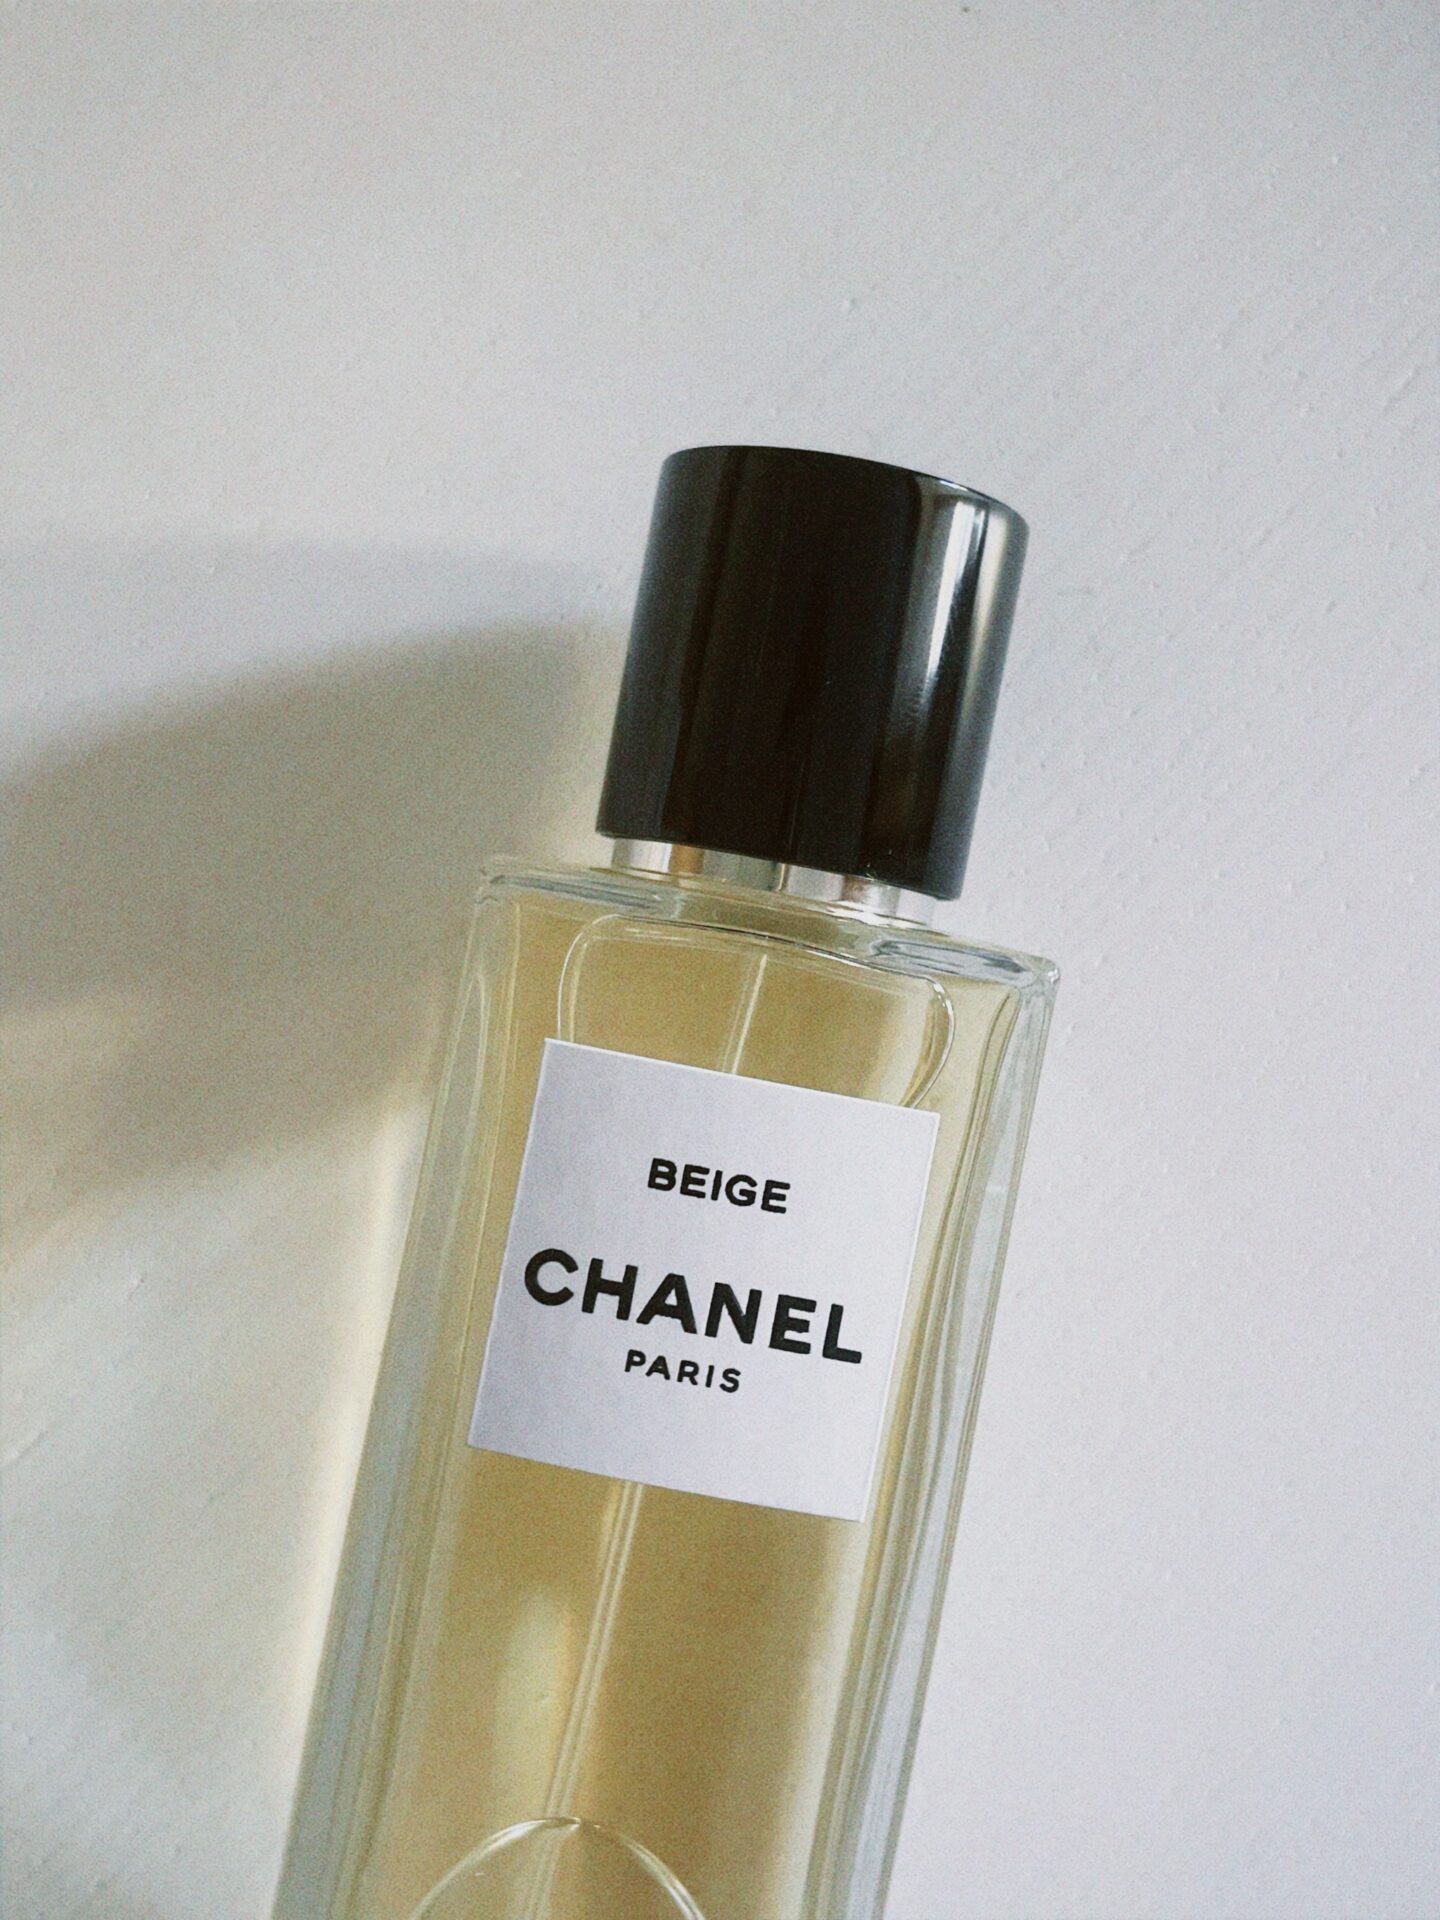 NEW IN: Beige Les Exclusifs de Chanel